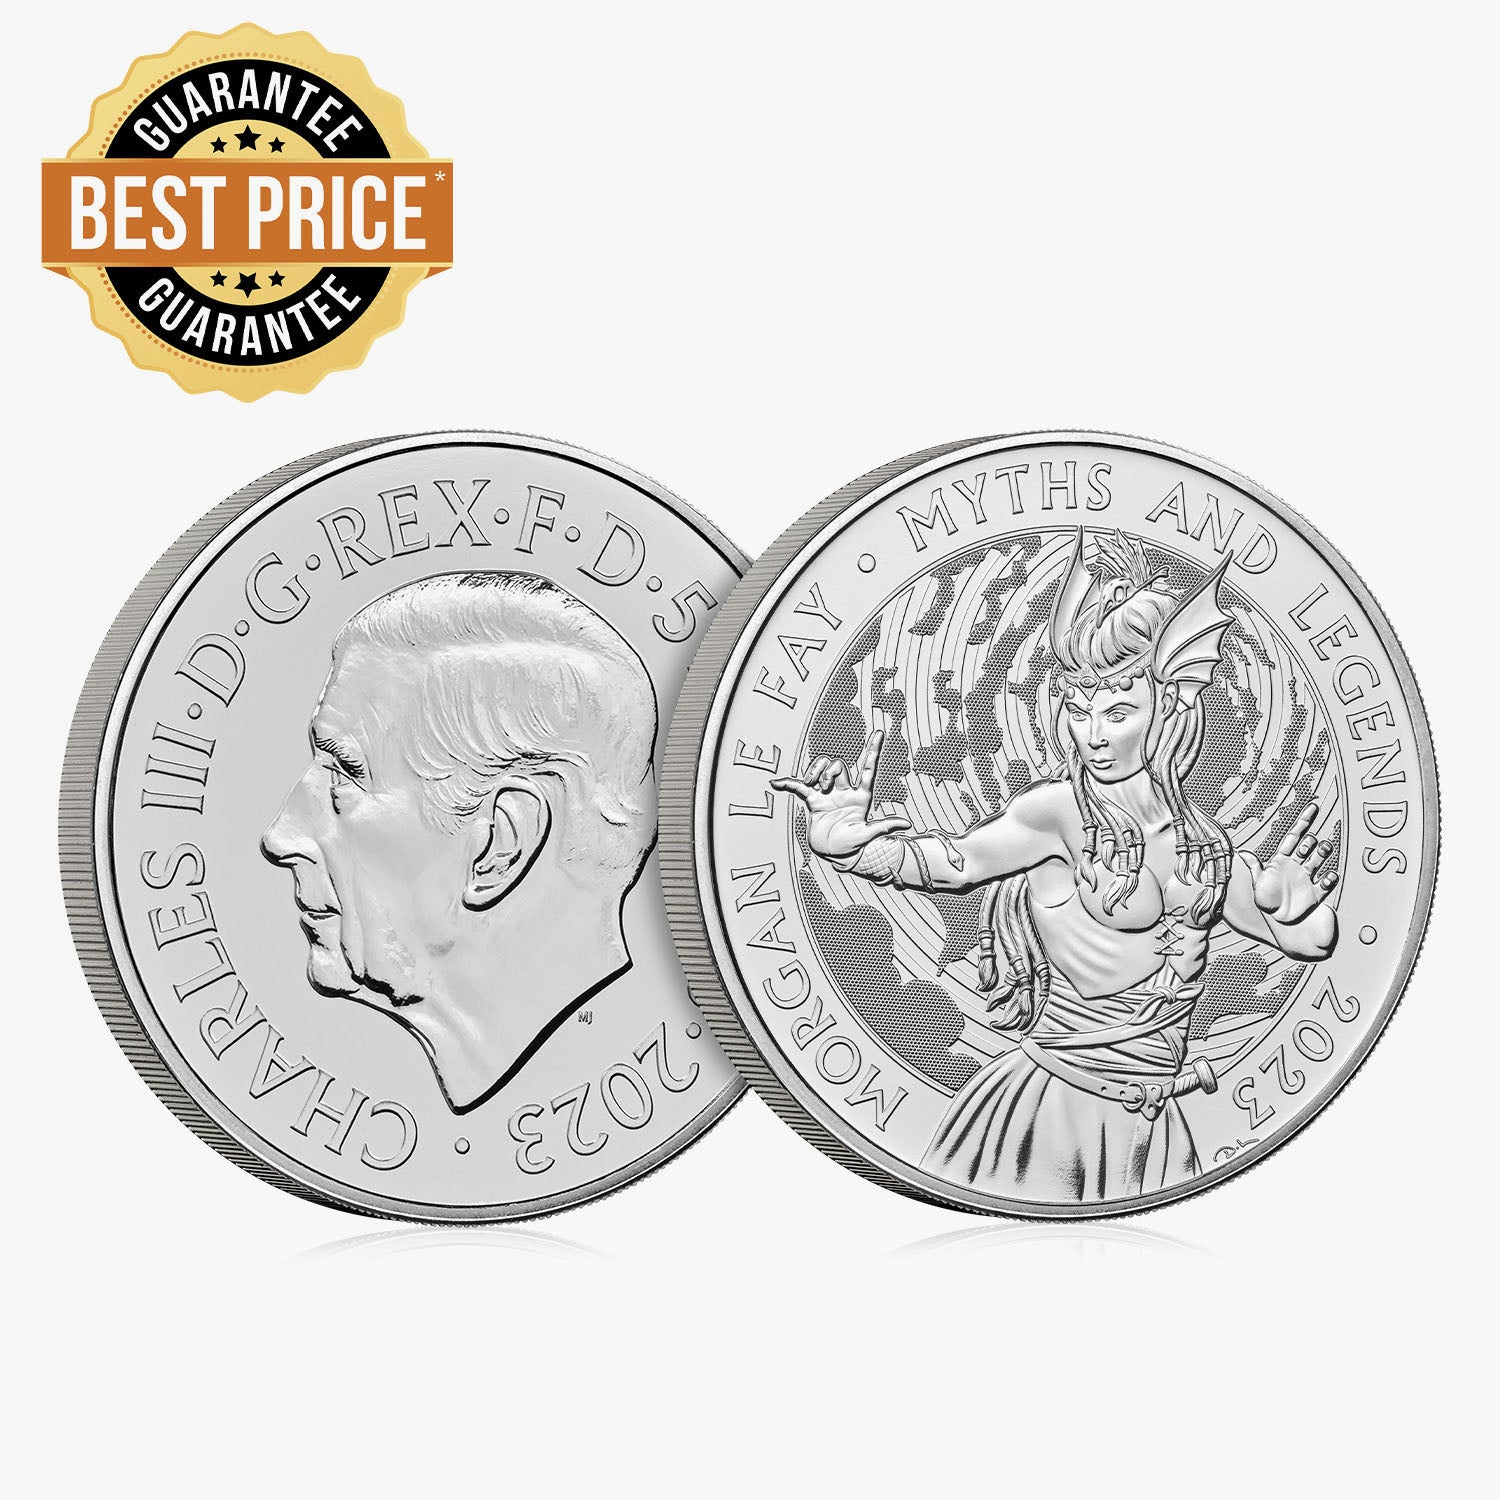 Myths and Legends Morgan Le Fay 2023 £5 Brilliant Uncirculated Coin